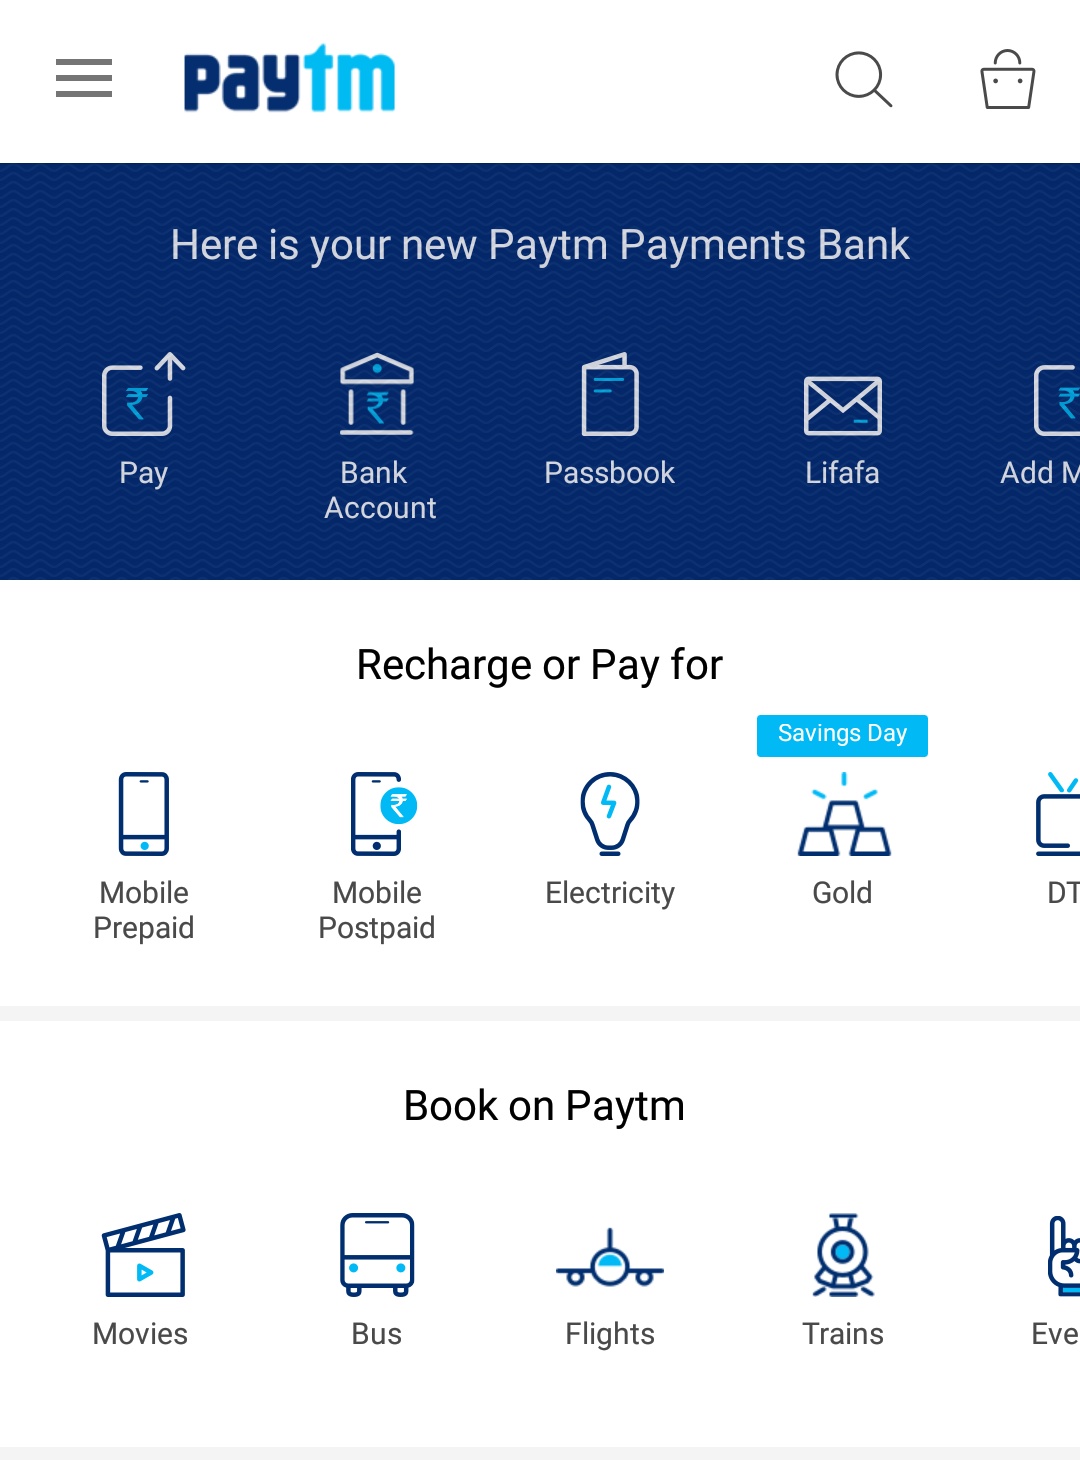 paytm payment bank app download apk